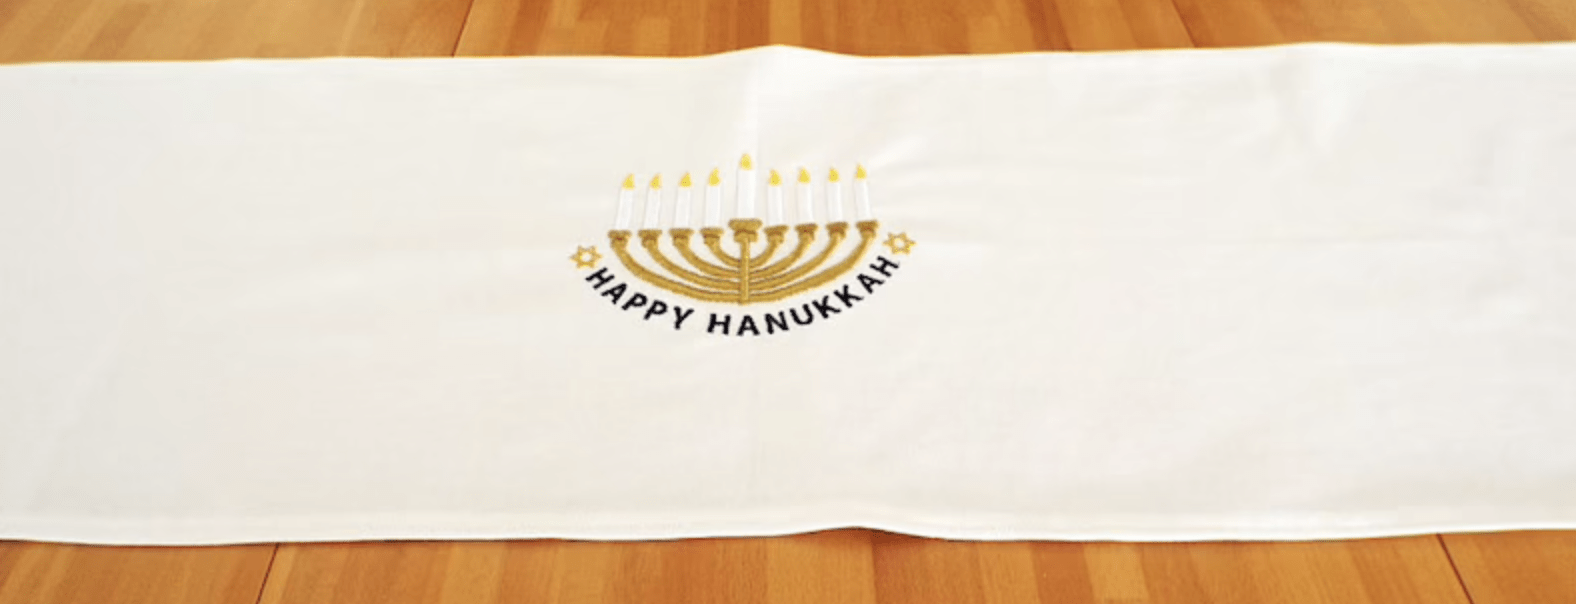 Three Generations Decorations Gold Menorah Hanukkah Table Runner